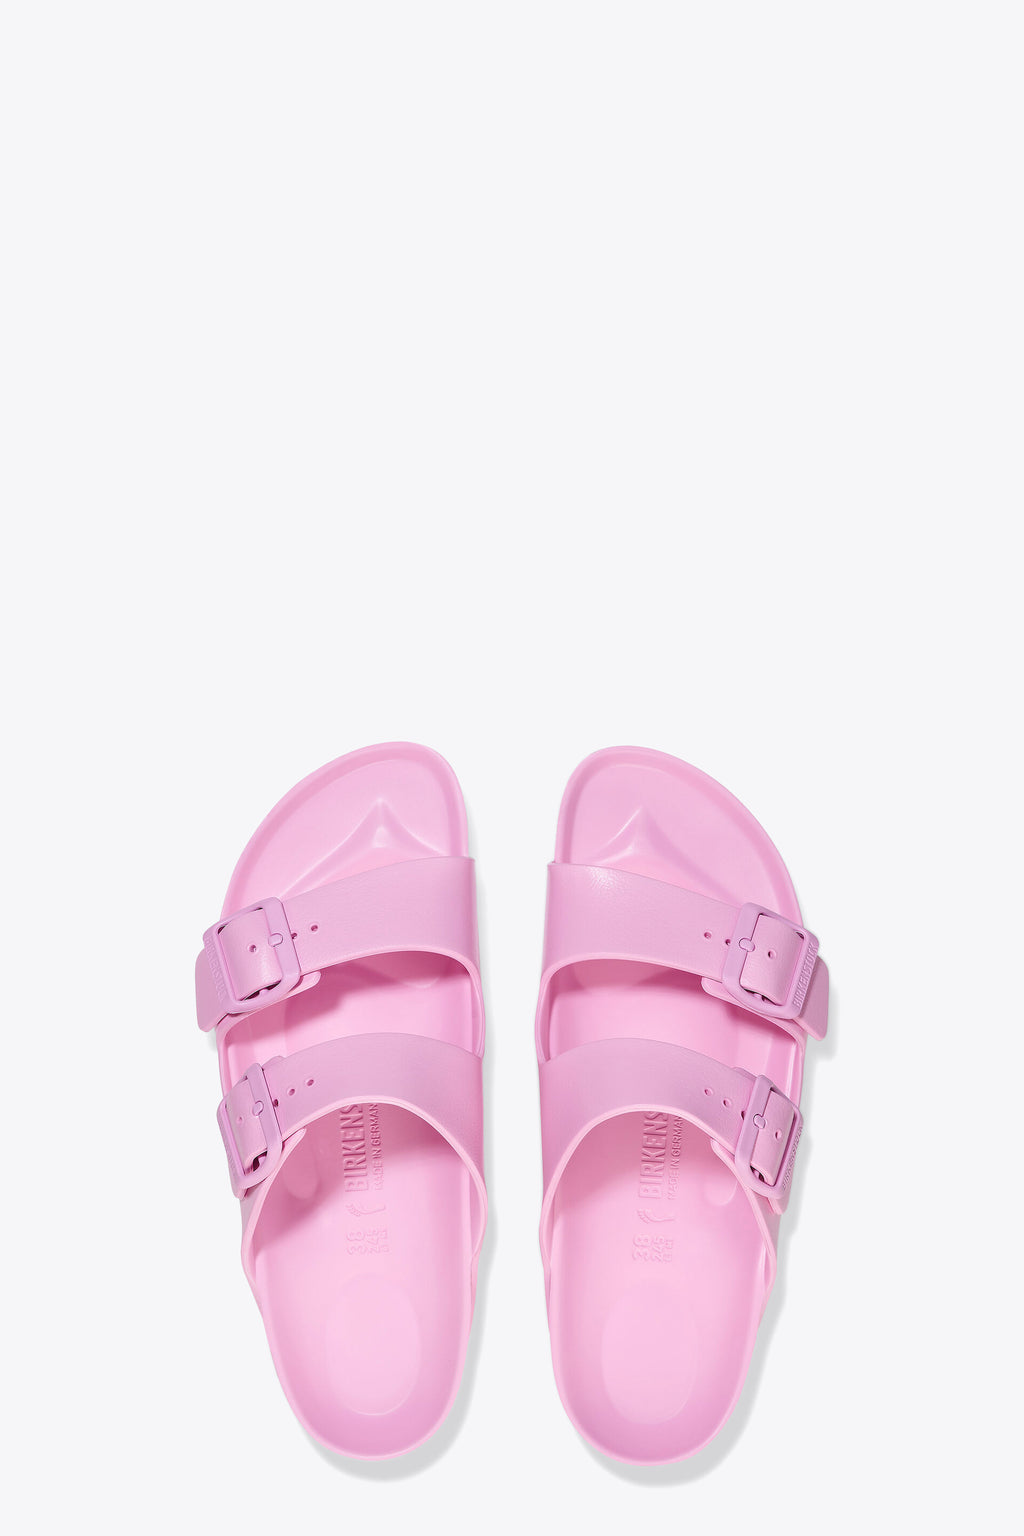 alt-image__Pink-rubber-sandal-with-two-straps---Arizona-Eva